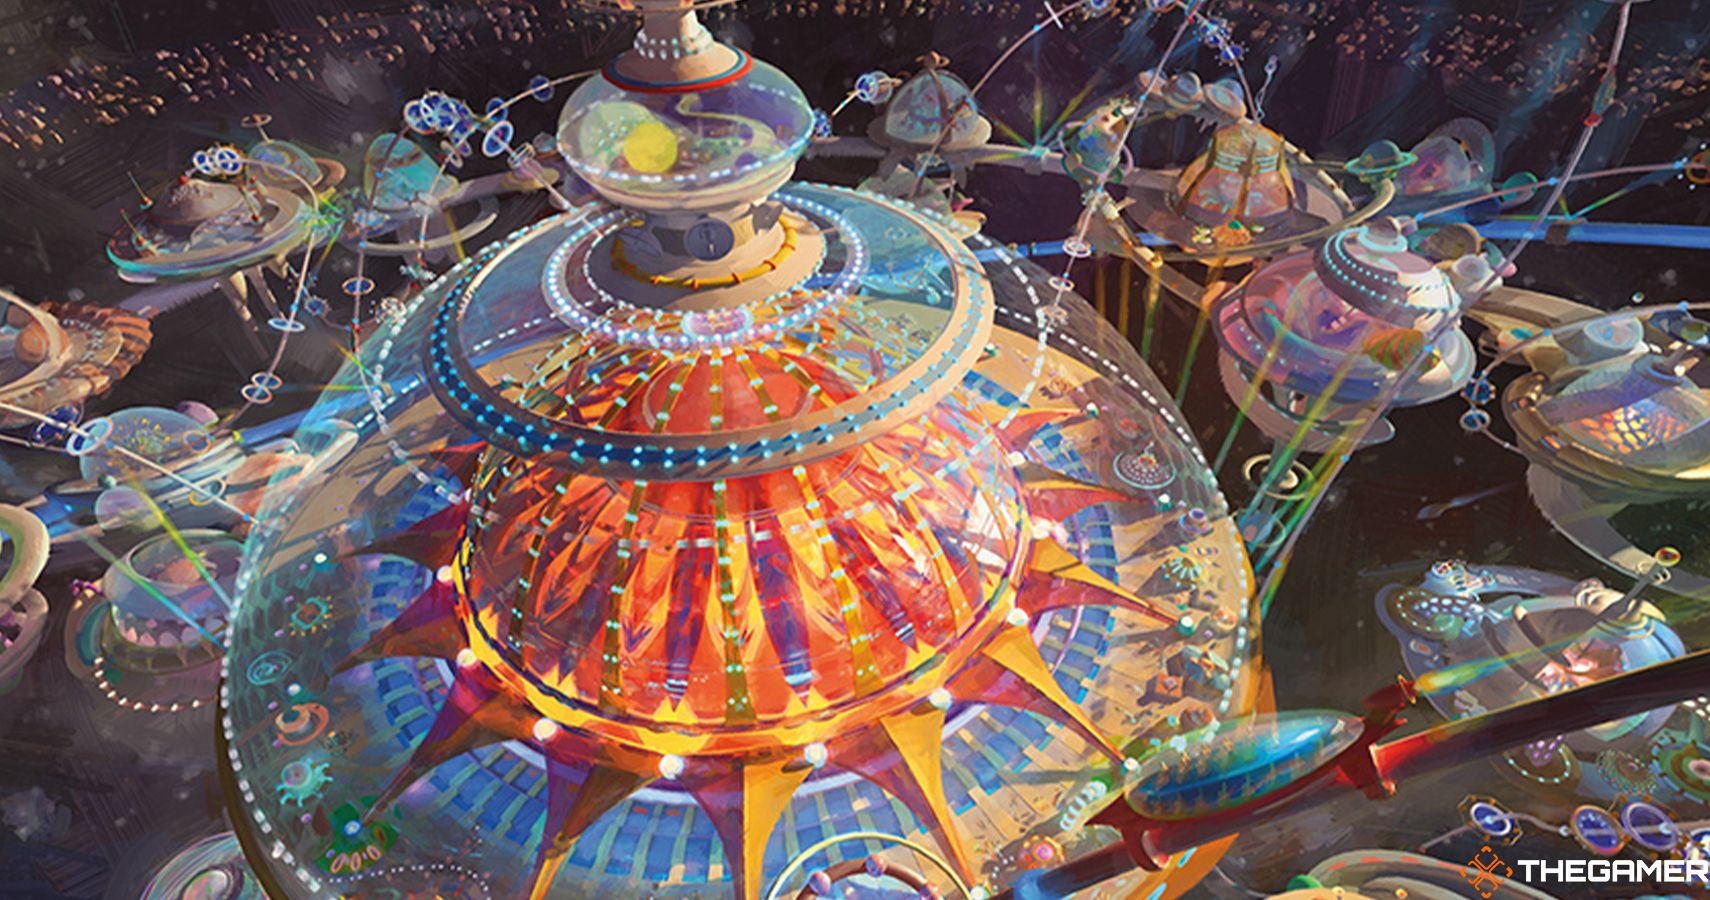 The Astrotorium by Kirsten Zirngibl